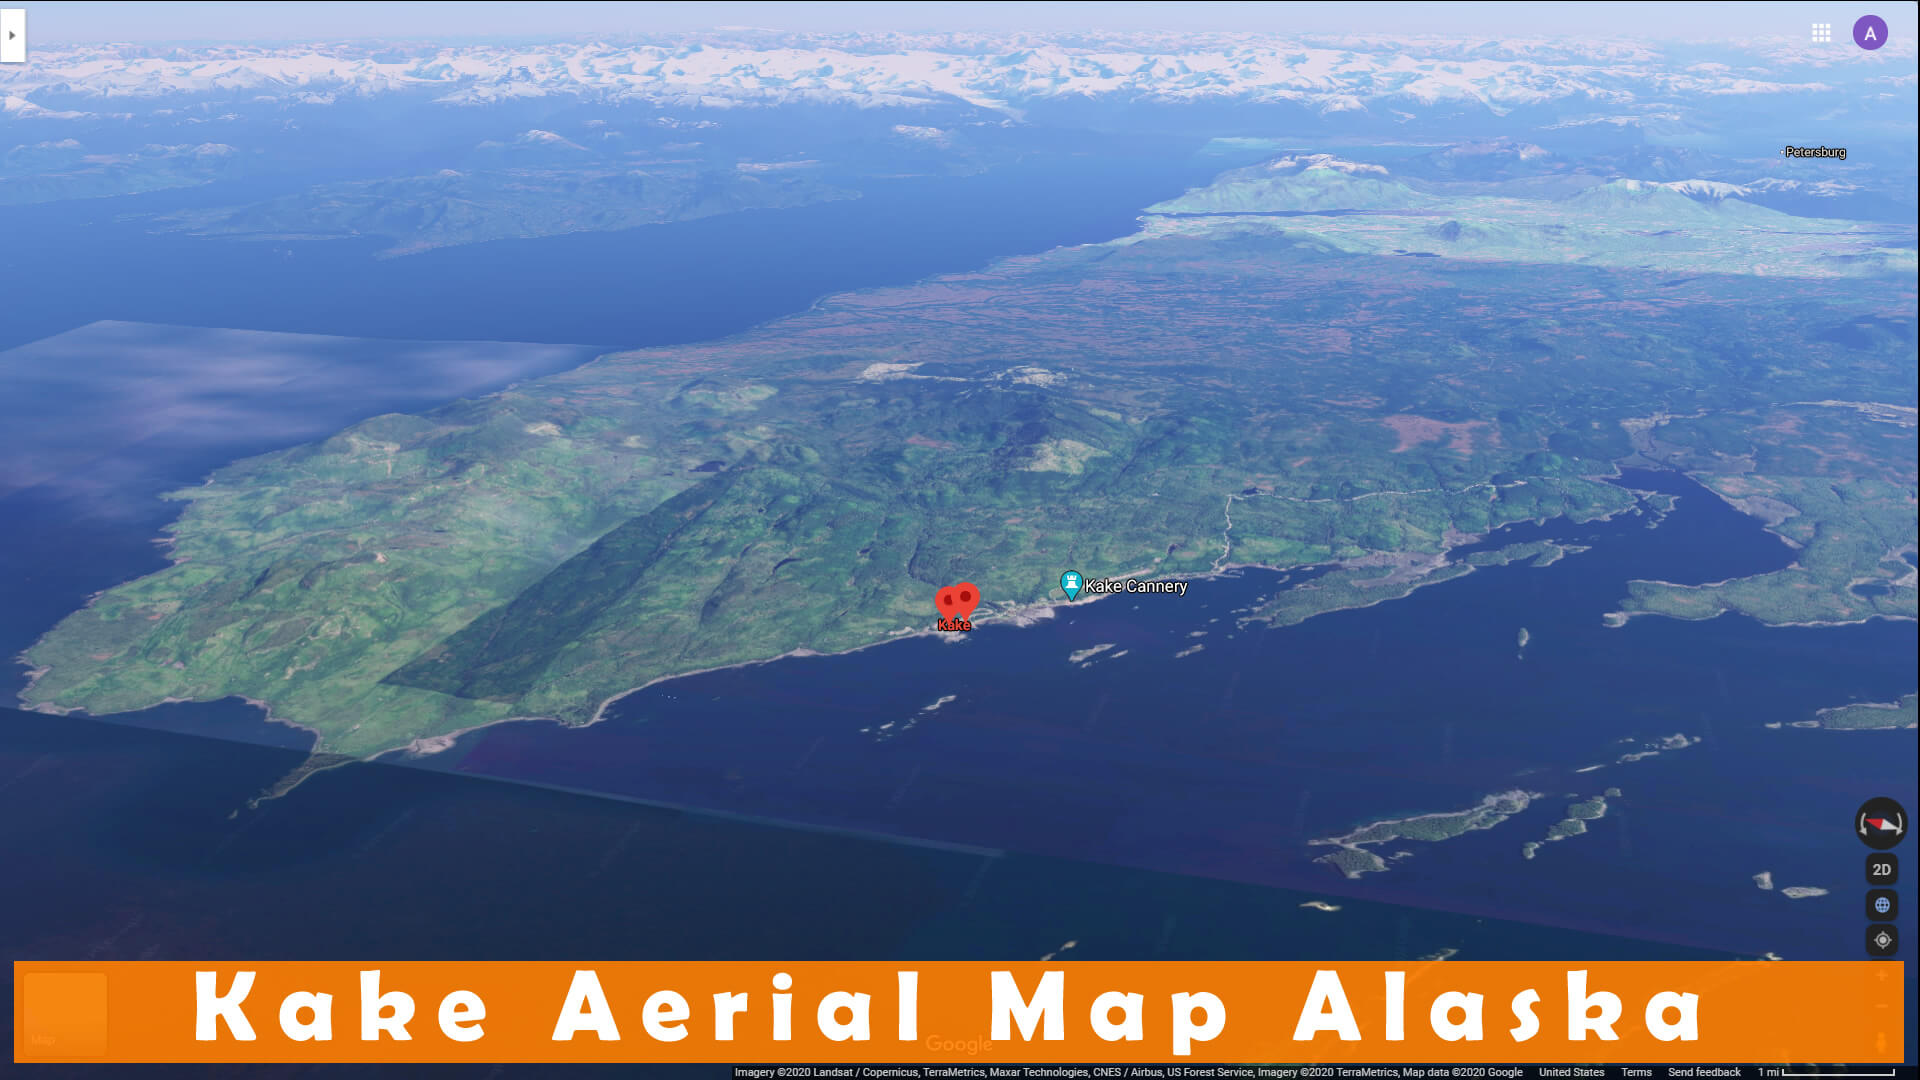 Kake Aerial Map Alaska